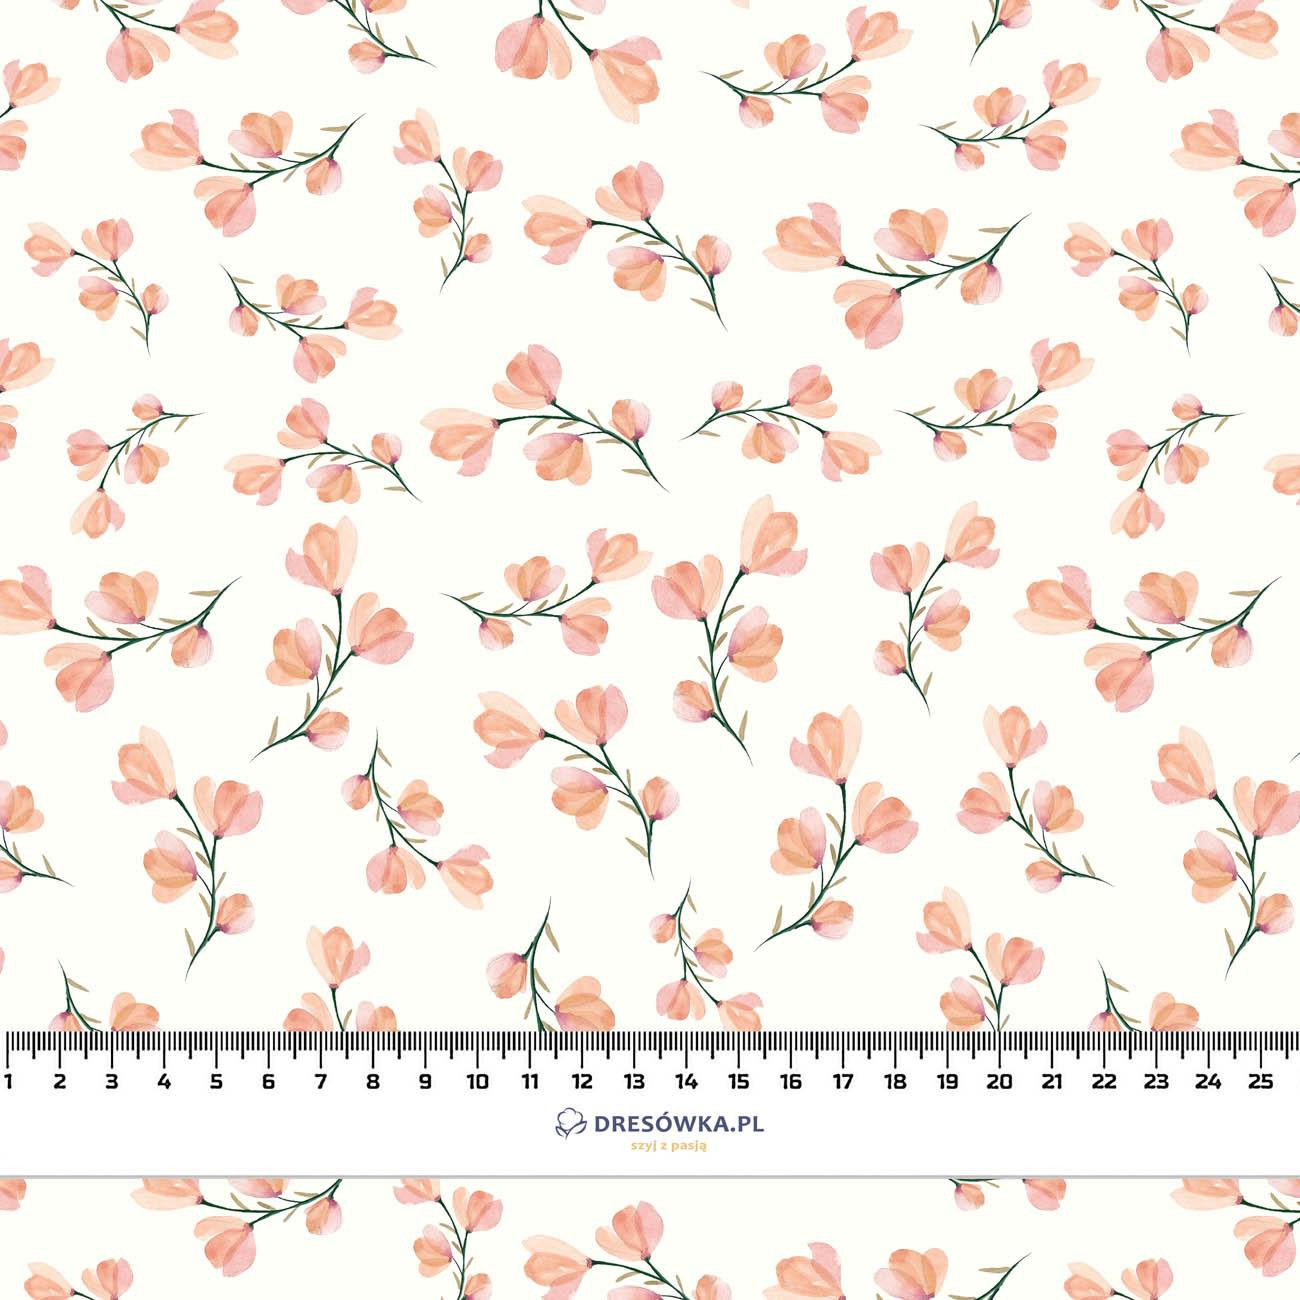 PINK FLOWERS PAT. 4 / white